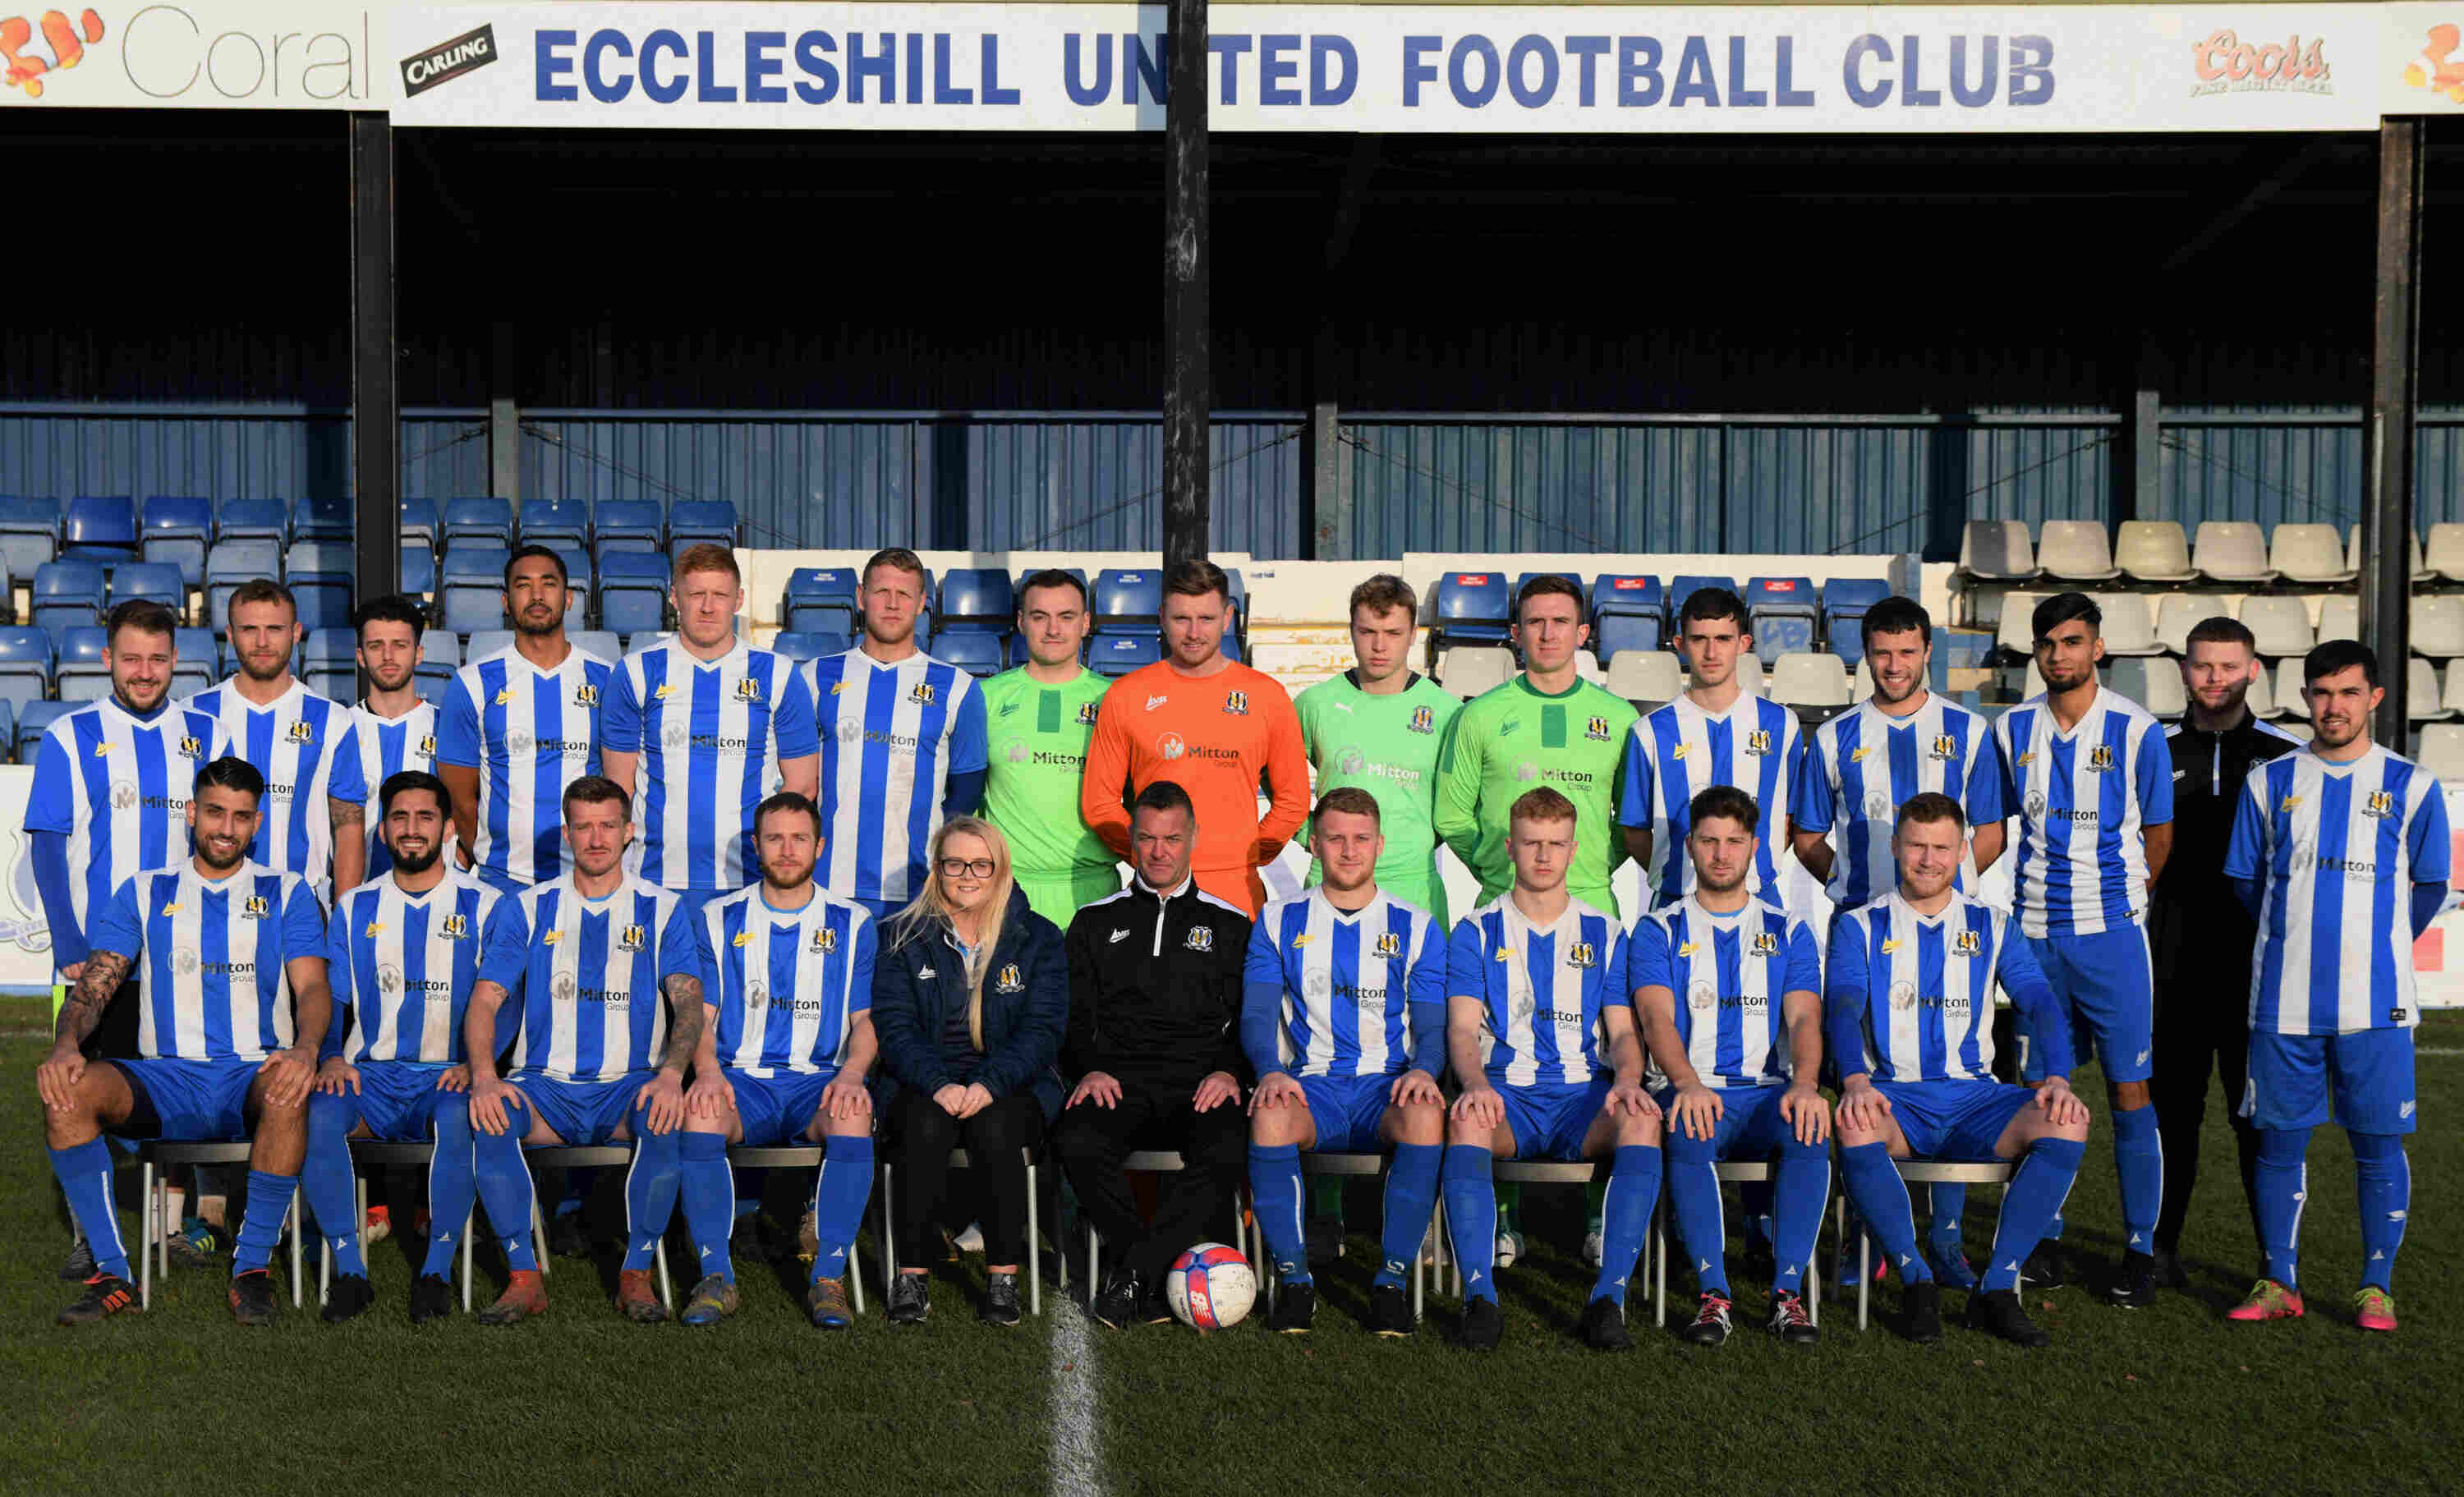 eccleshill-united-fc-23-football-club-facts